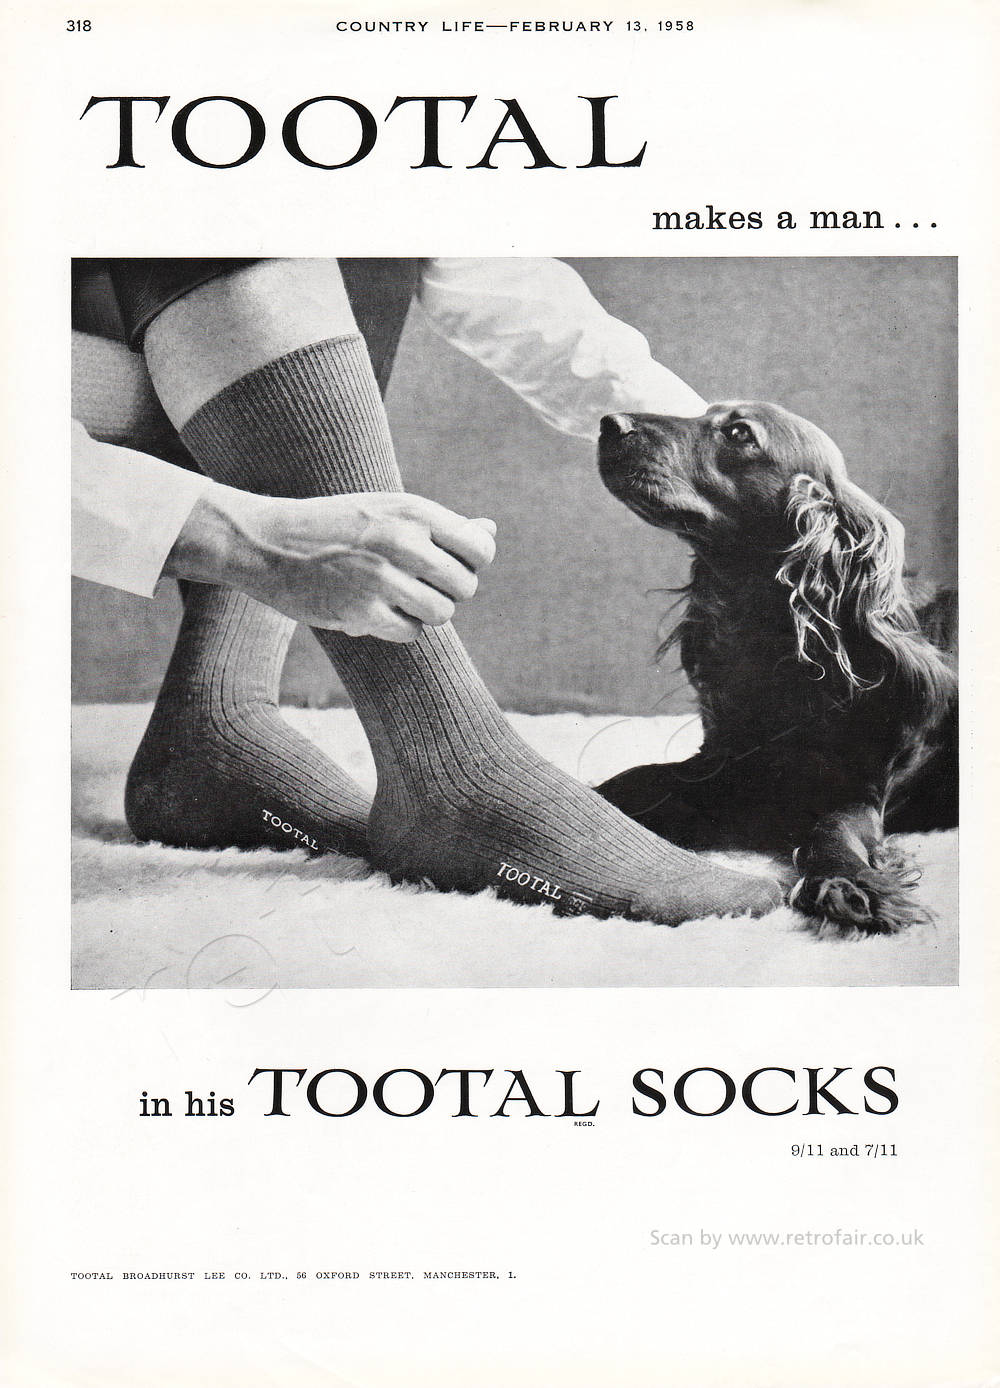  1958 Tootal Socks unframed vintage ad